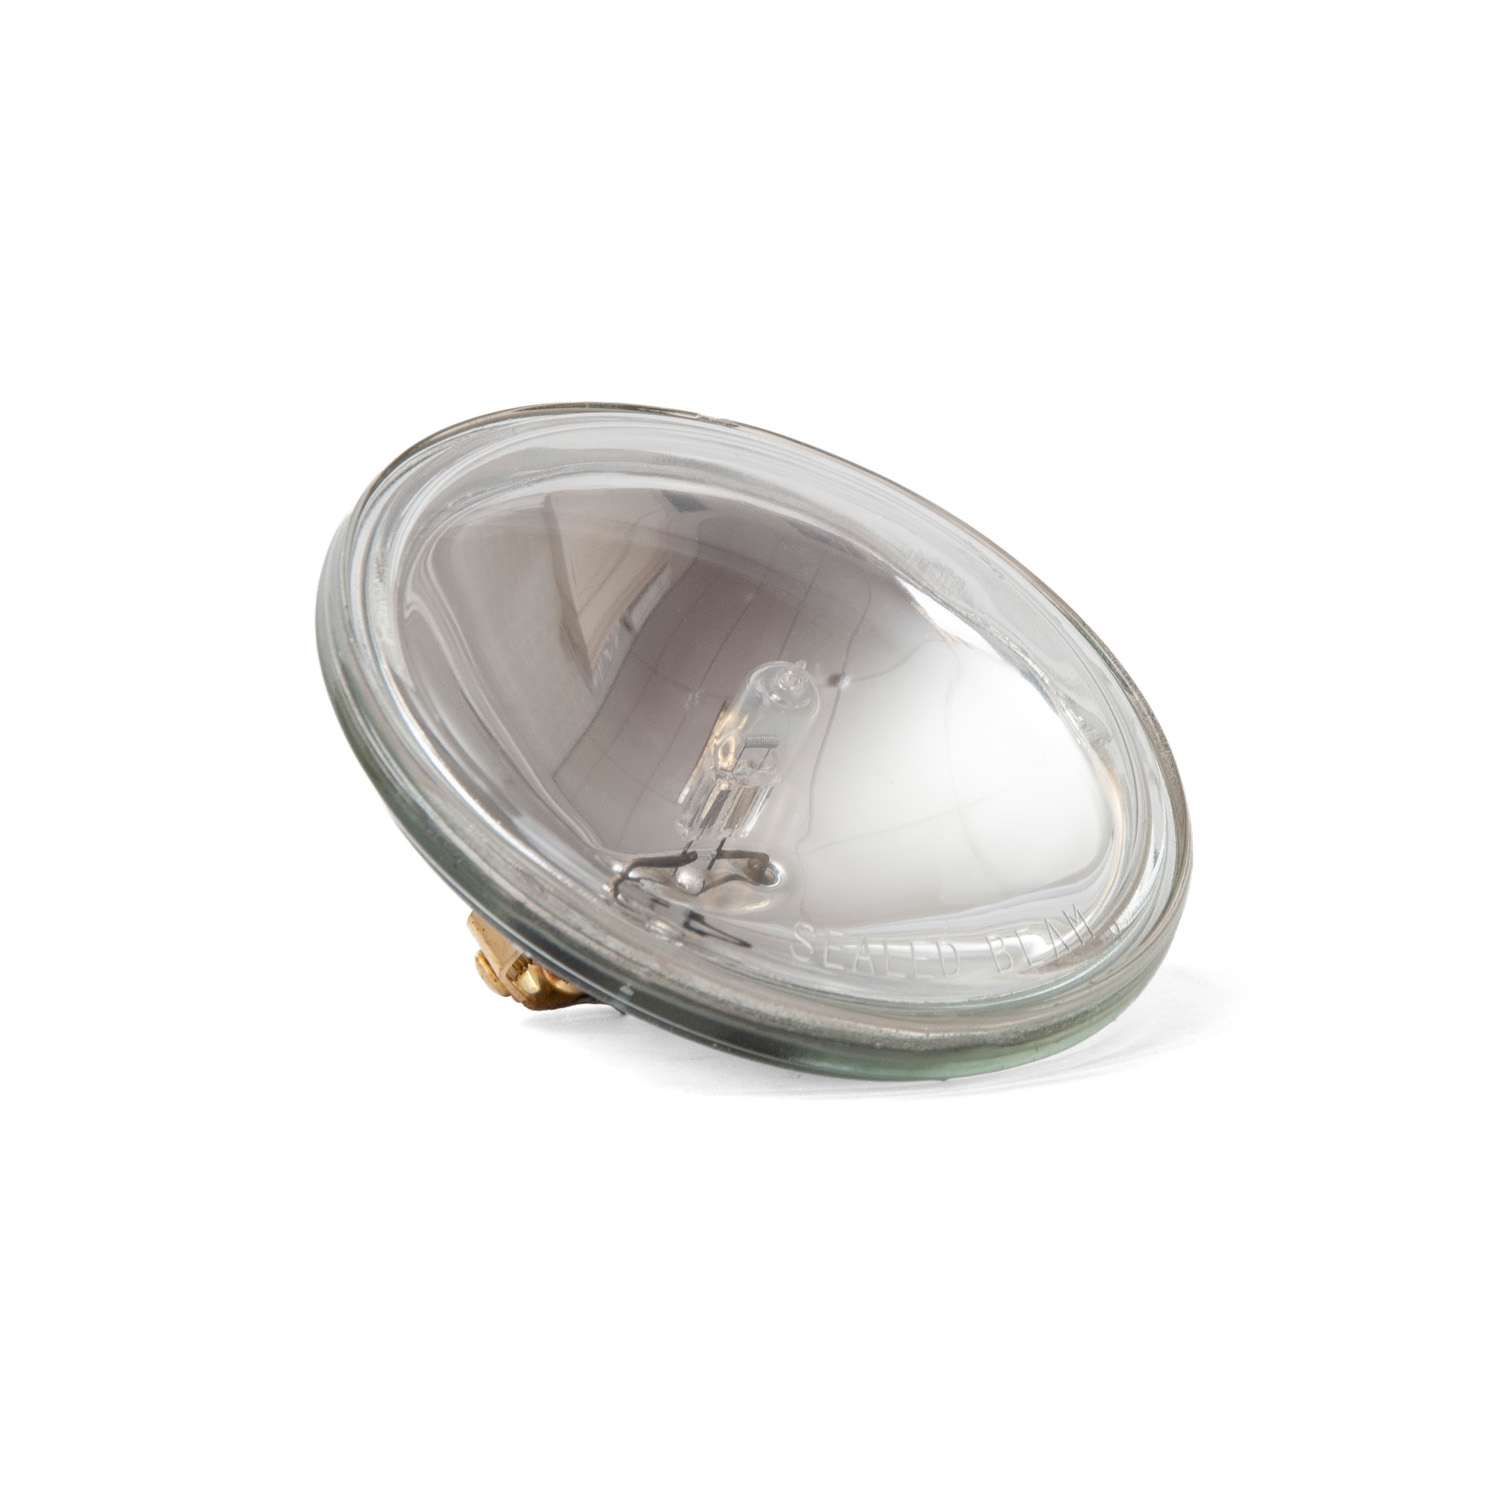 E-9040022800 Sealed beam lamp 12V-50W, halogen for portable searchlight type 3313